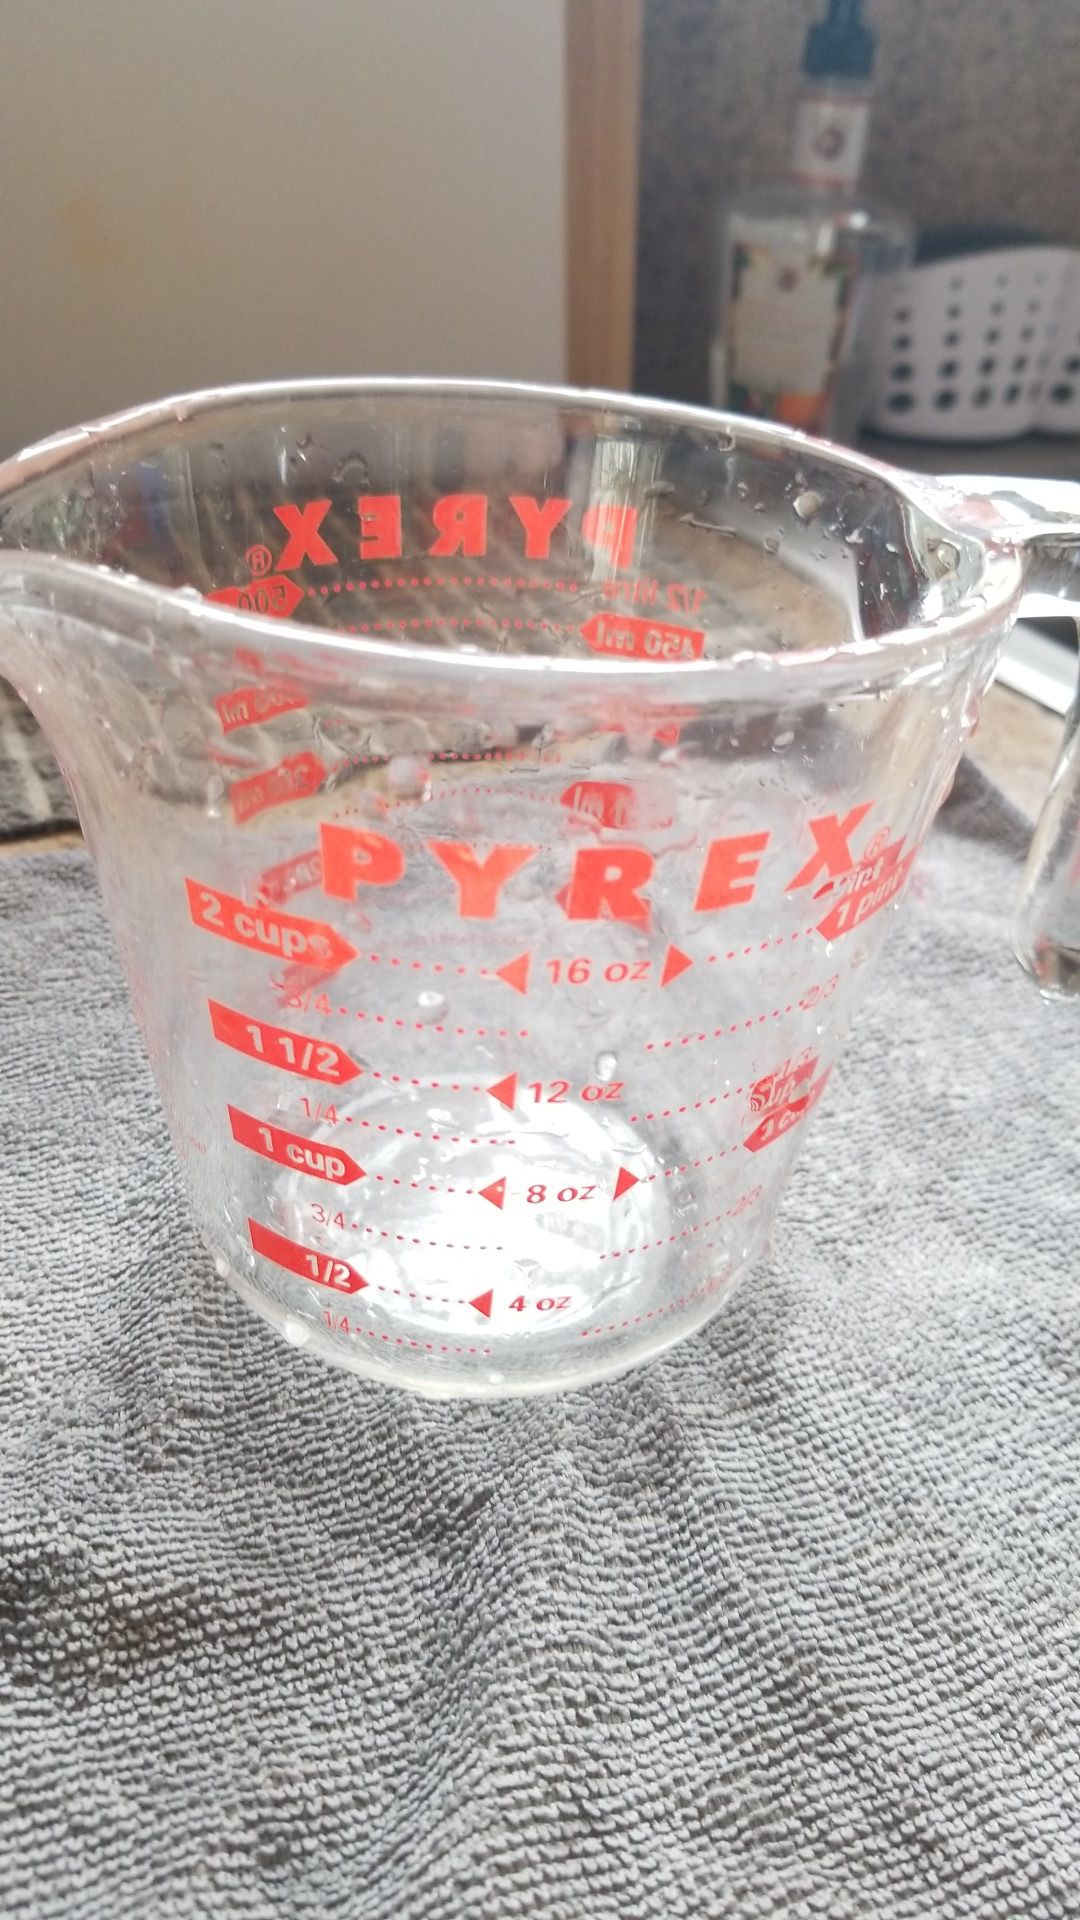 Pyrex 2 cup glass measurement cup